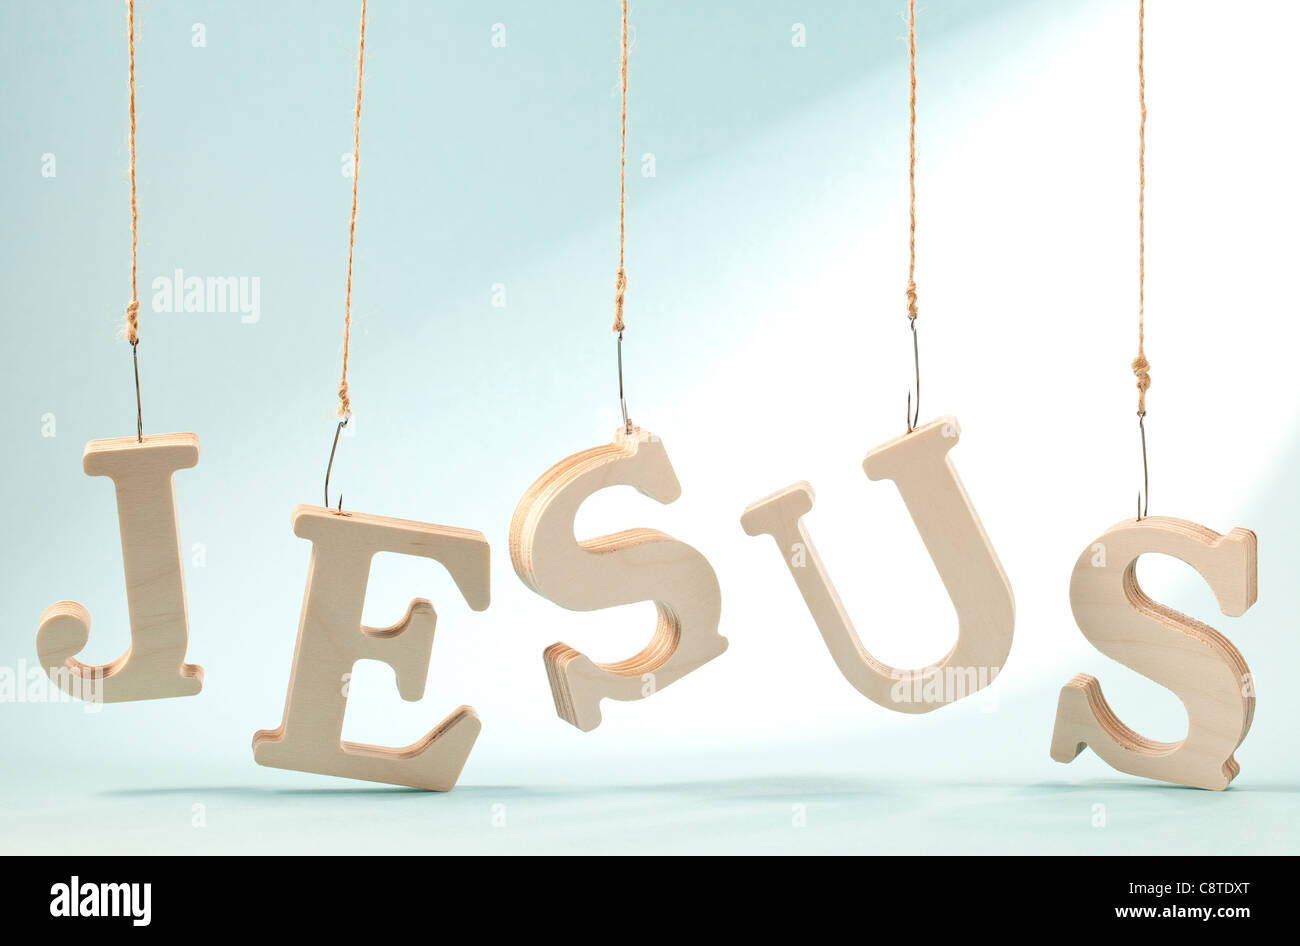 Einziges Wort "Jesus" Haken am seidenen Stockfoto